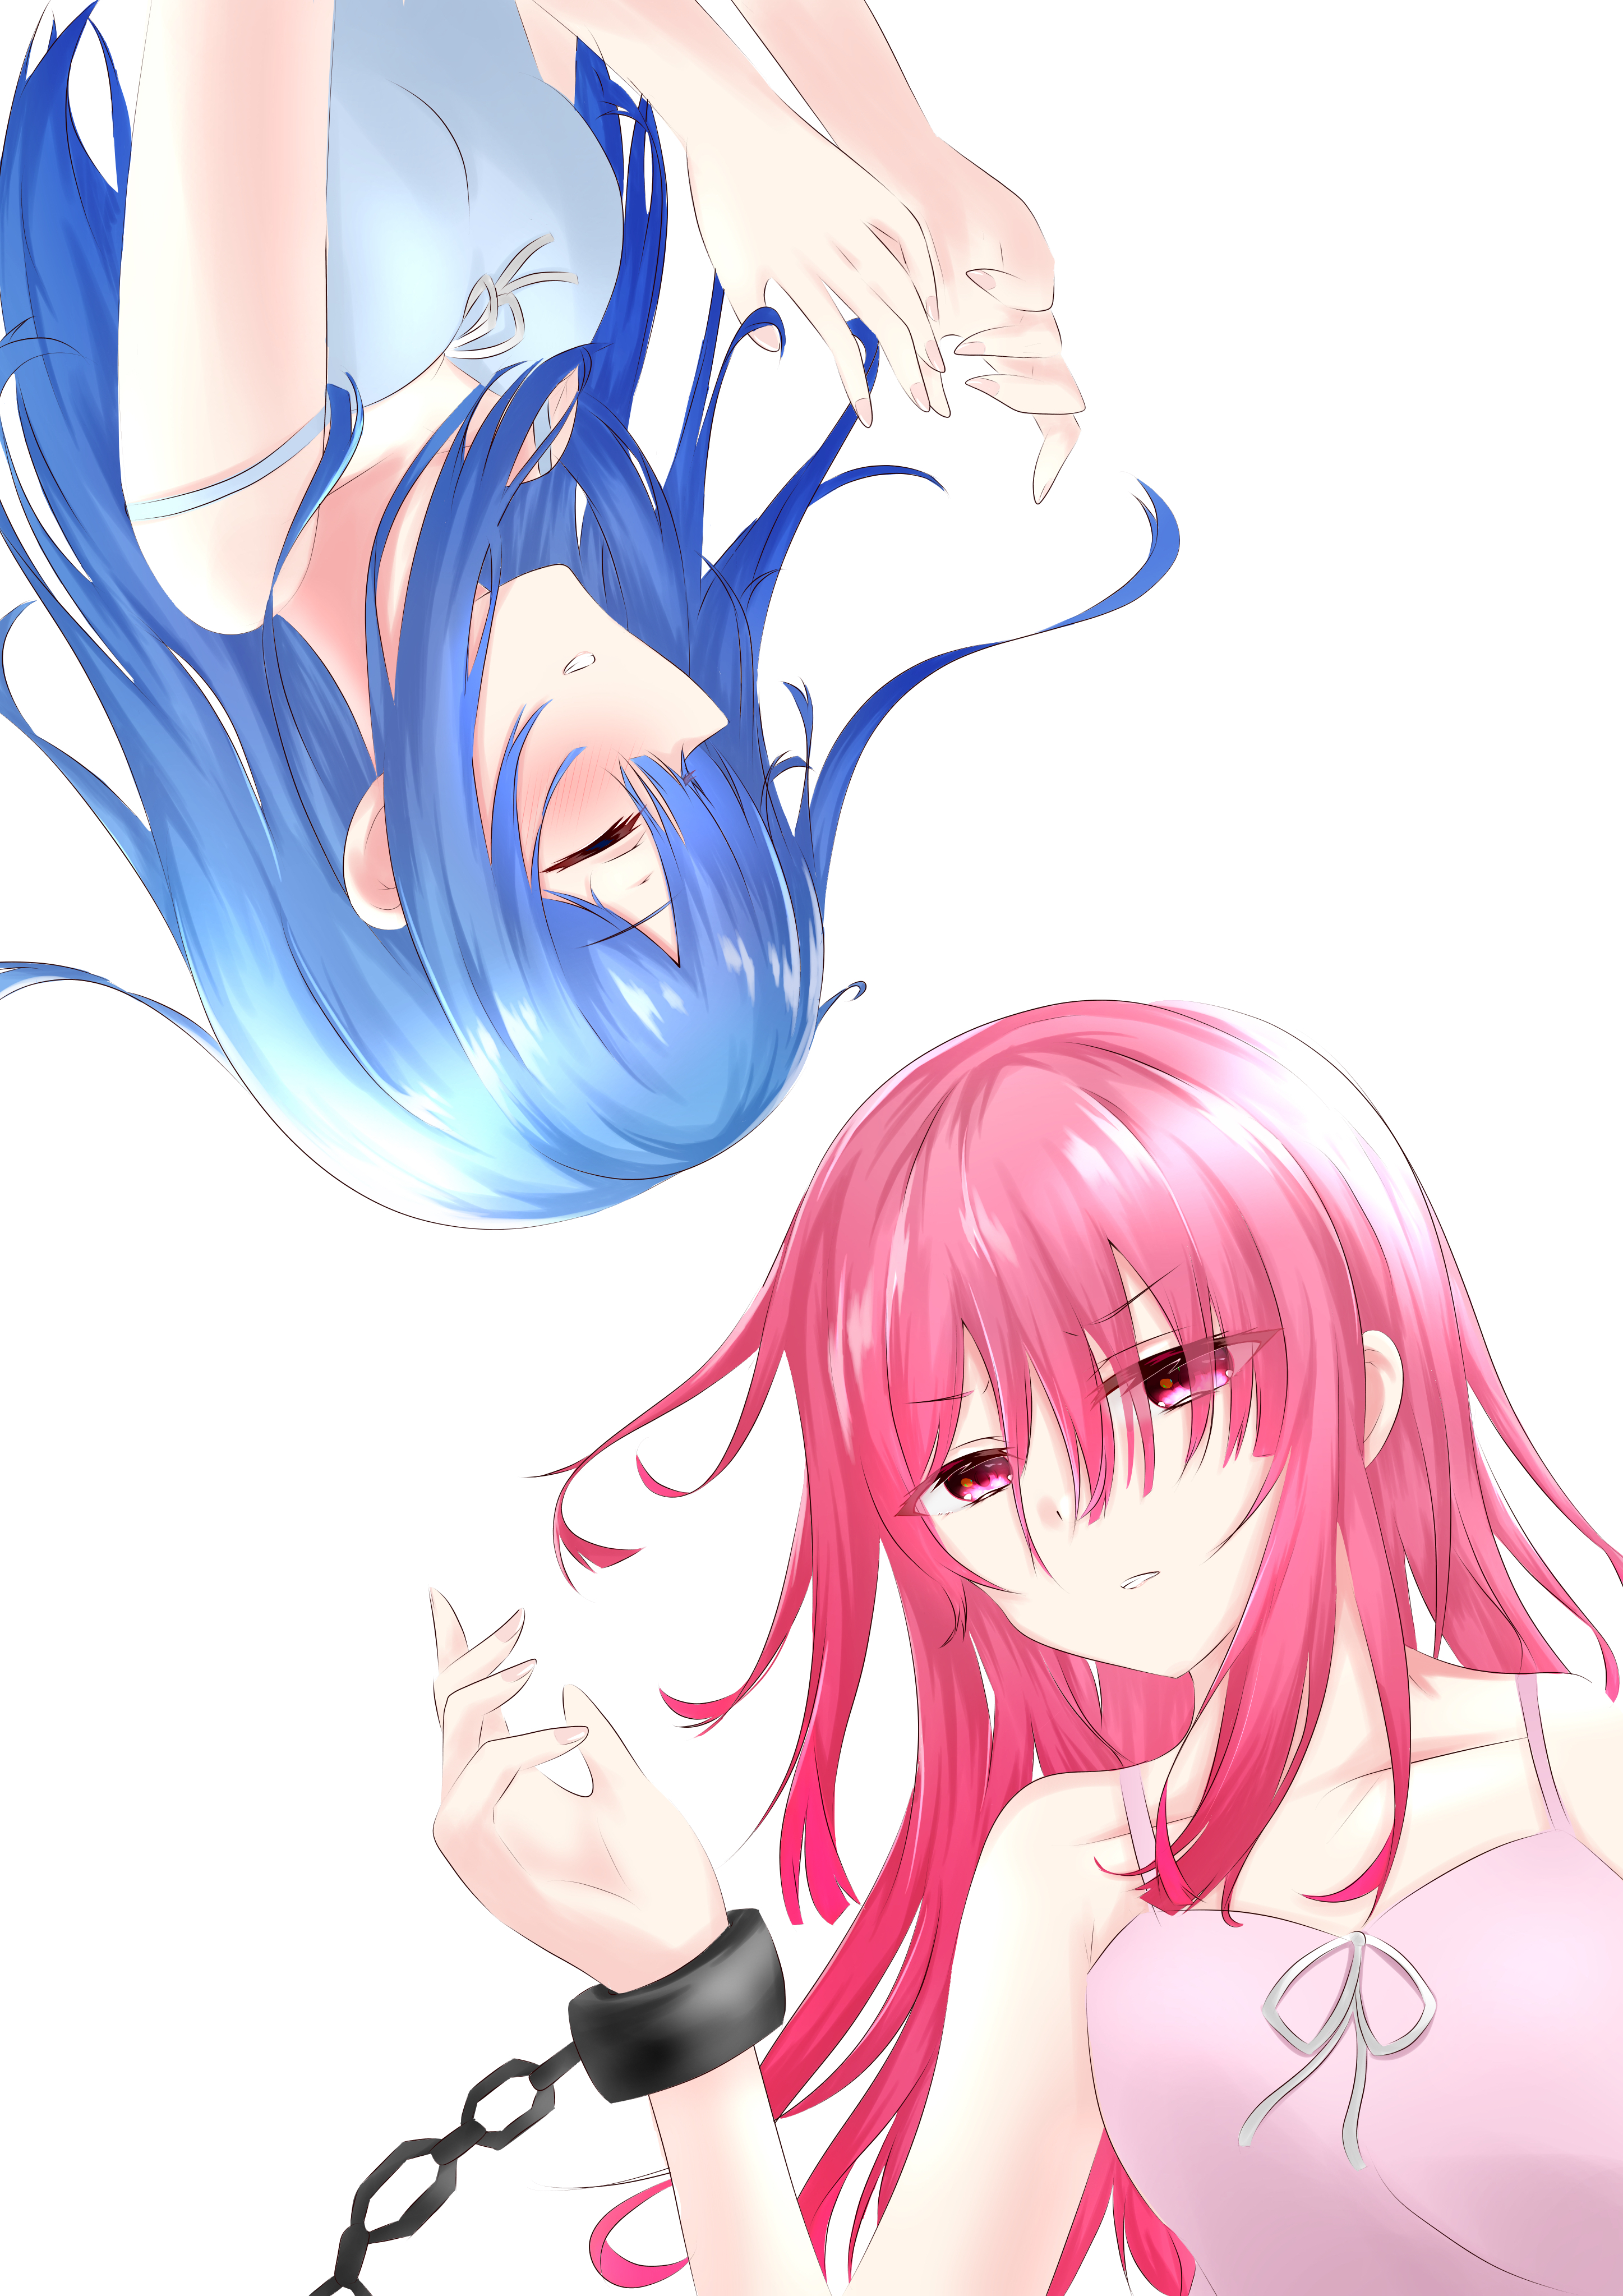 Anime 2894x4093 anime anime girls Re:Zero Kara Hajimeru Isekai Seikatsu Rem (Re:Zero) Ram (Re: Zero) twins long hair blue hair pink hair